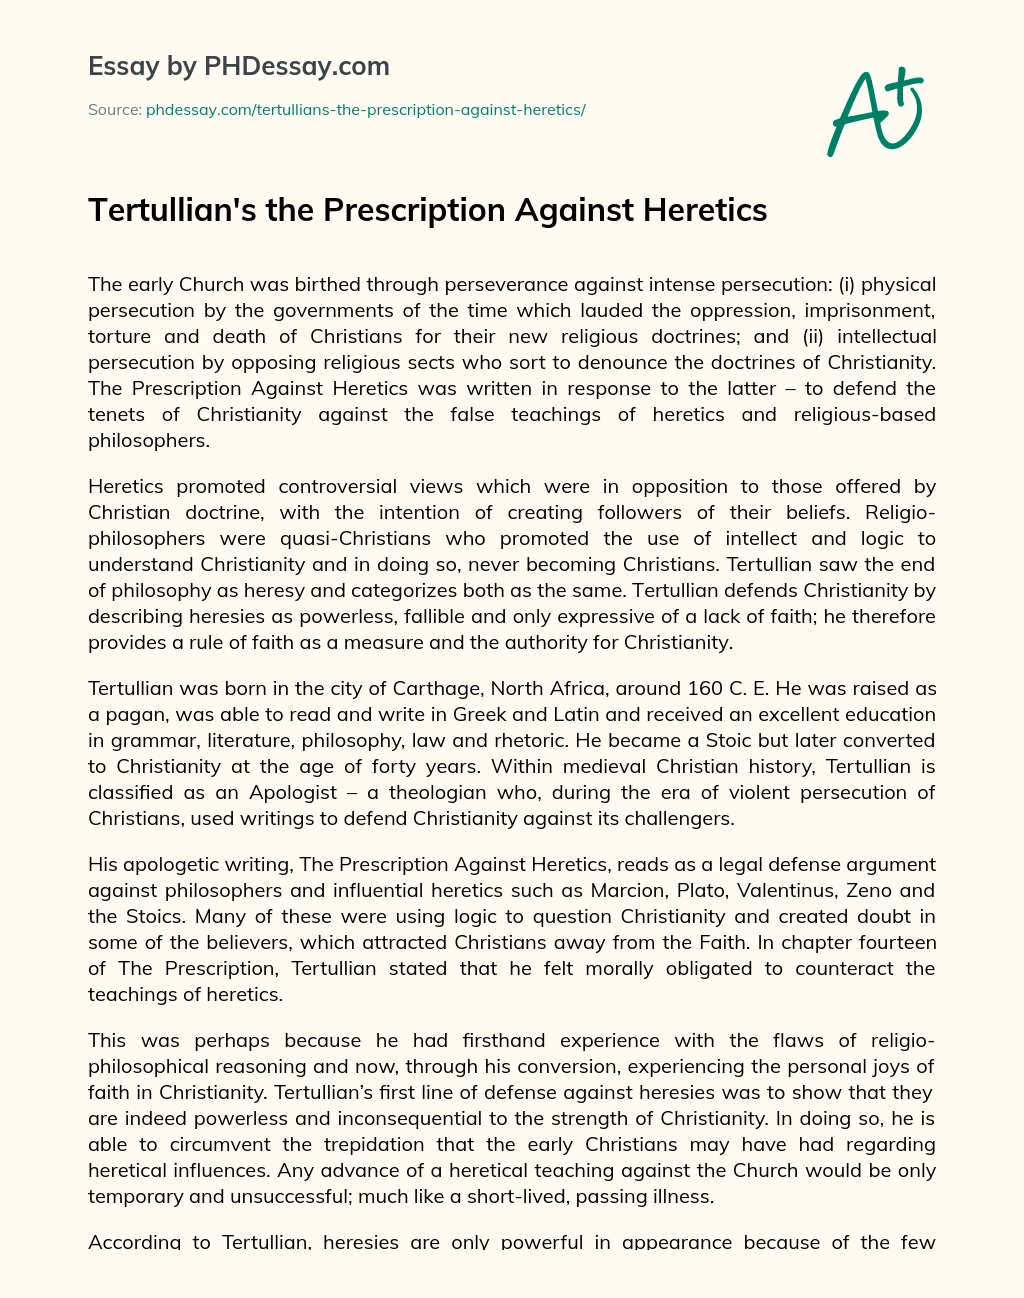 Tertullian’s the Prescription Against Heretics essay